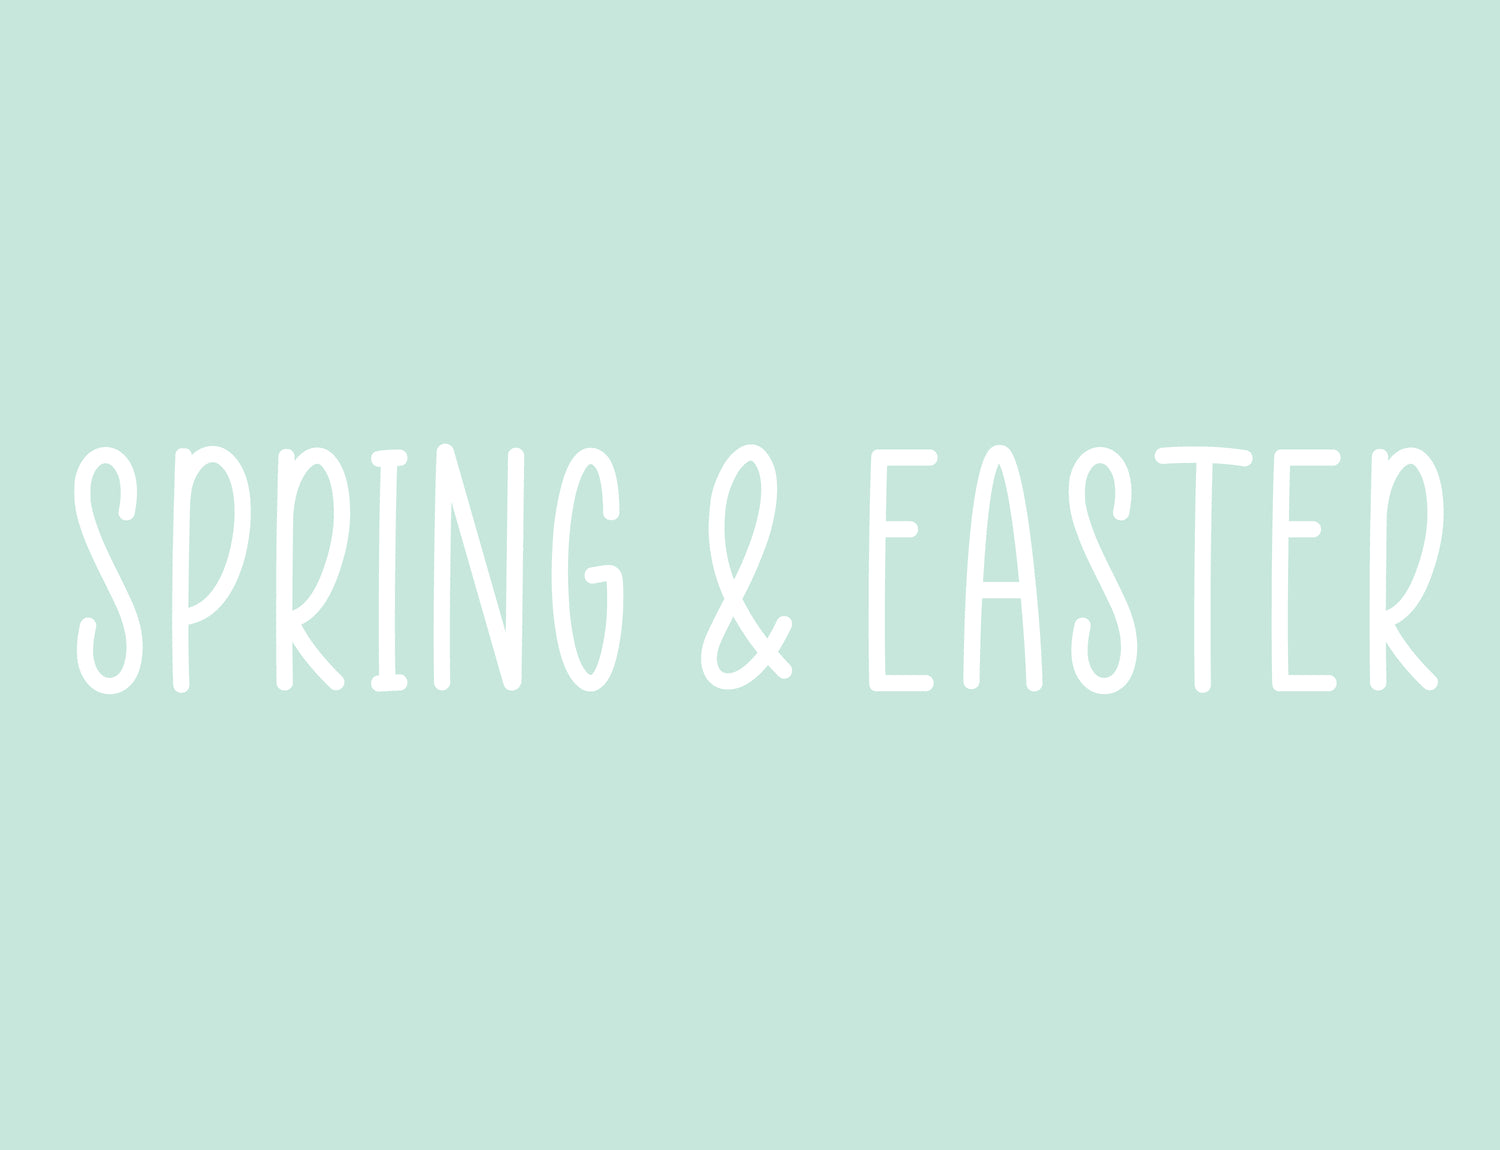 Spring & Easter